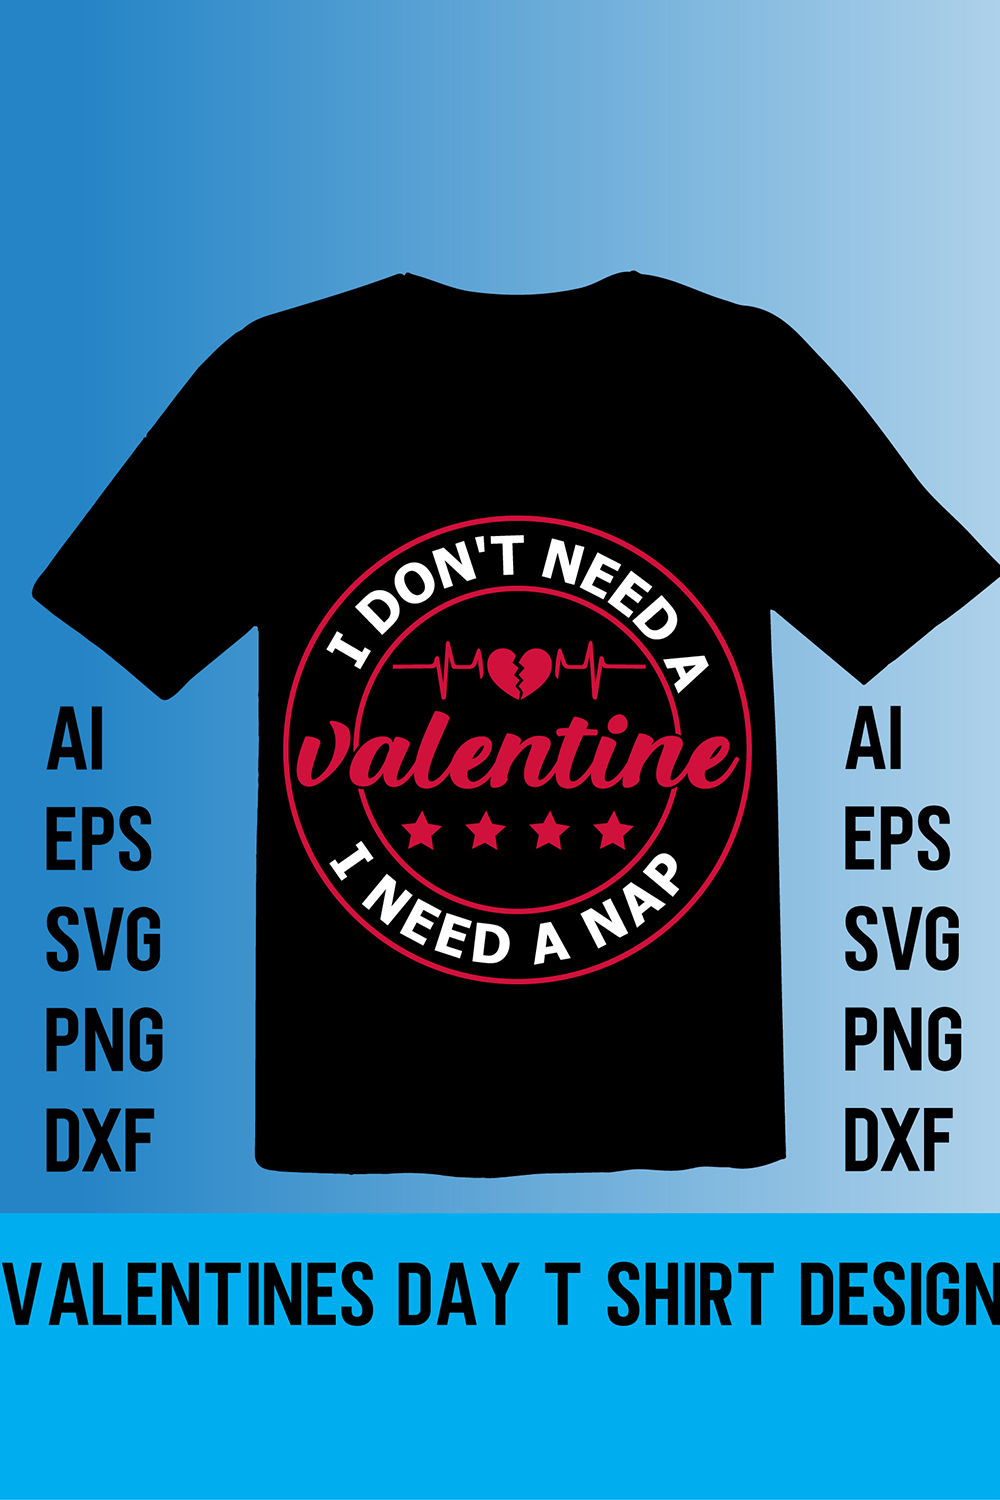 I Don't Need a Valentine i Need a Nap Design T-Shirt Pinterest image.